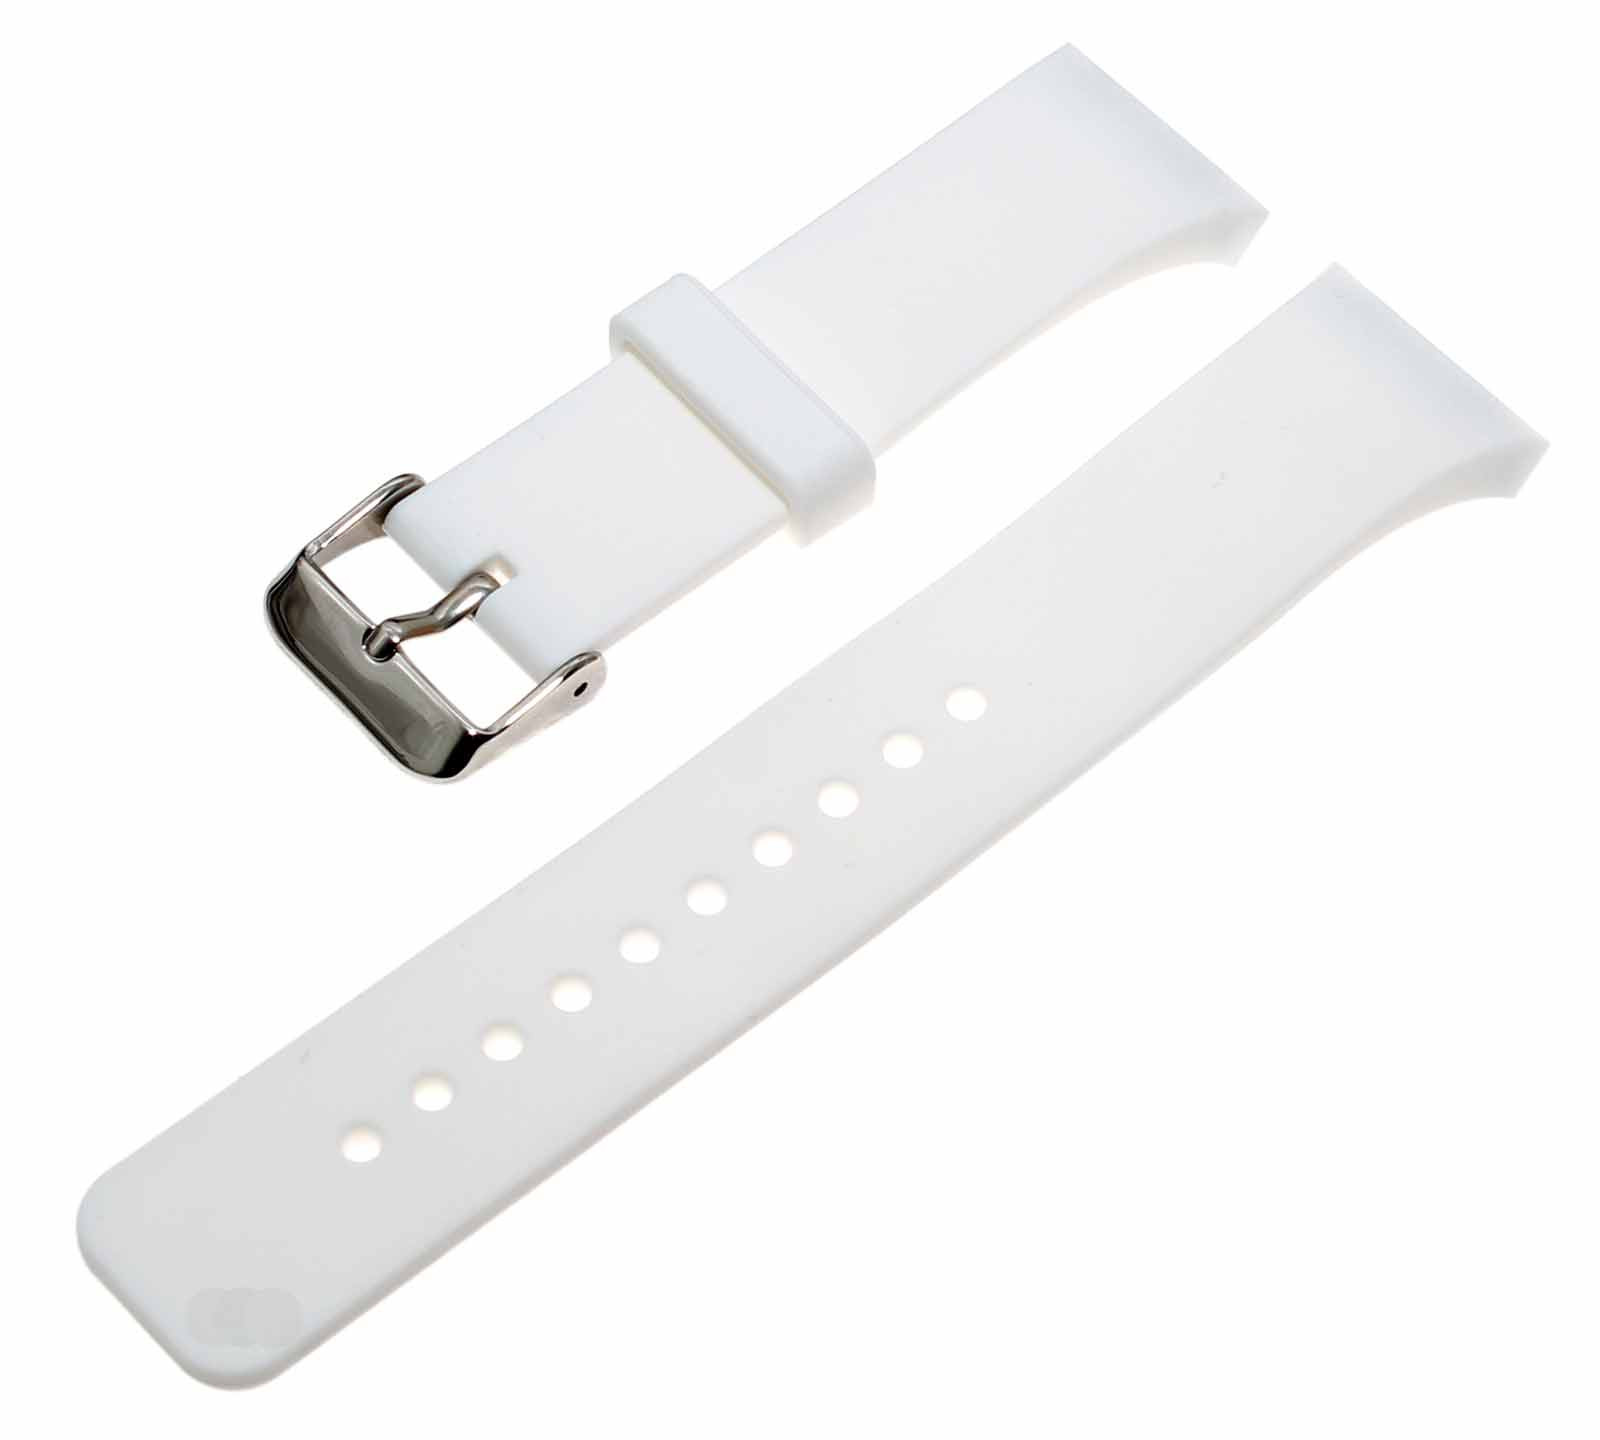 Uhrenarmband für Samsung Gear S2 SM-R720, SM-R730 Smartwatch, Fitnesstracker, Silikon, weiss